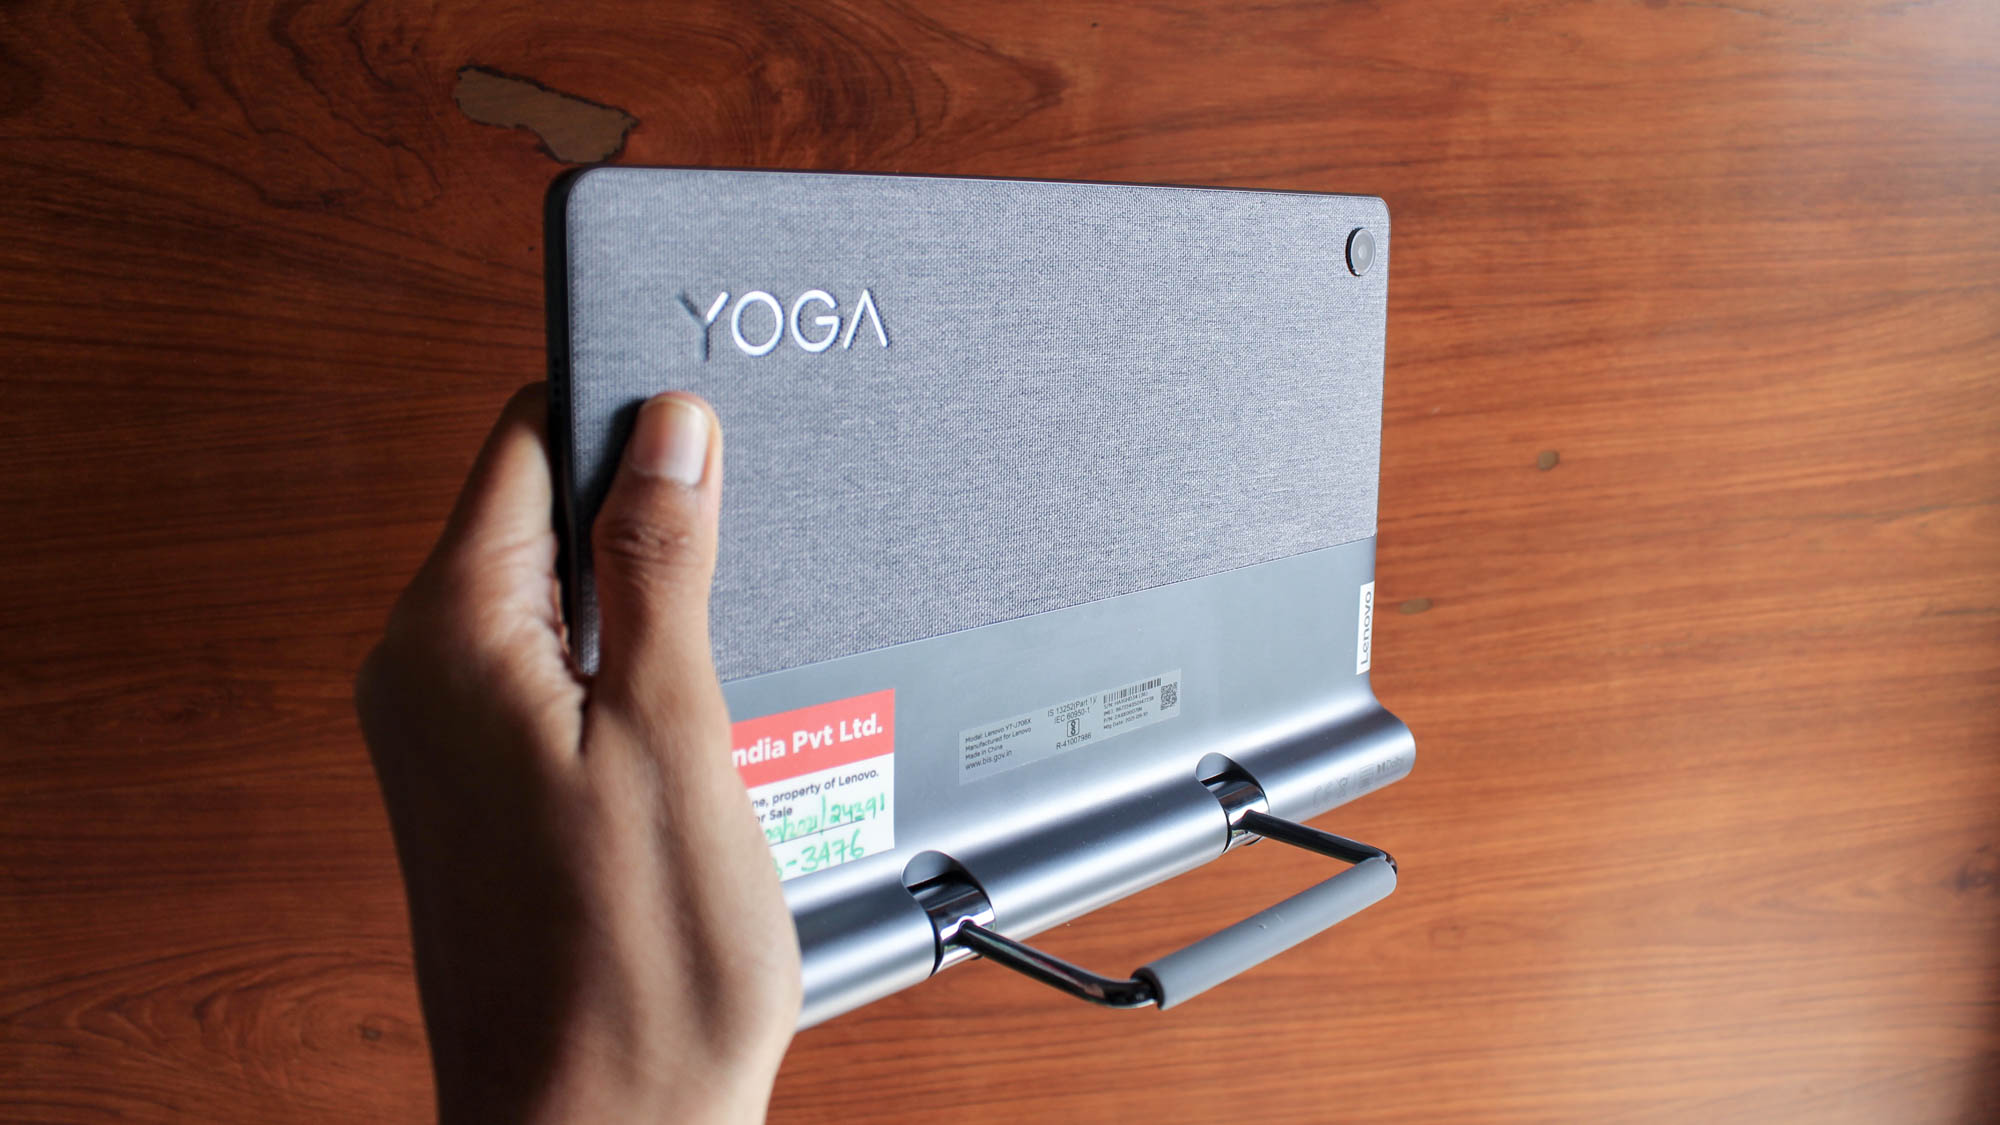 Lenovo Yoga Tab 11 ZA8W0074JP ストームグレー-